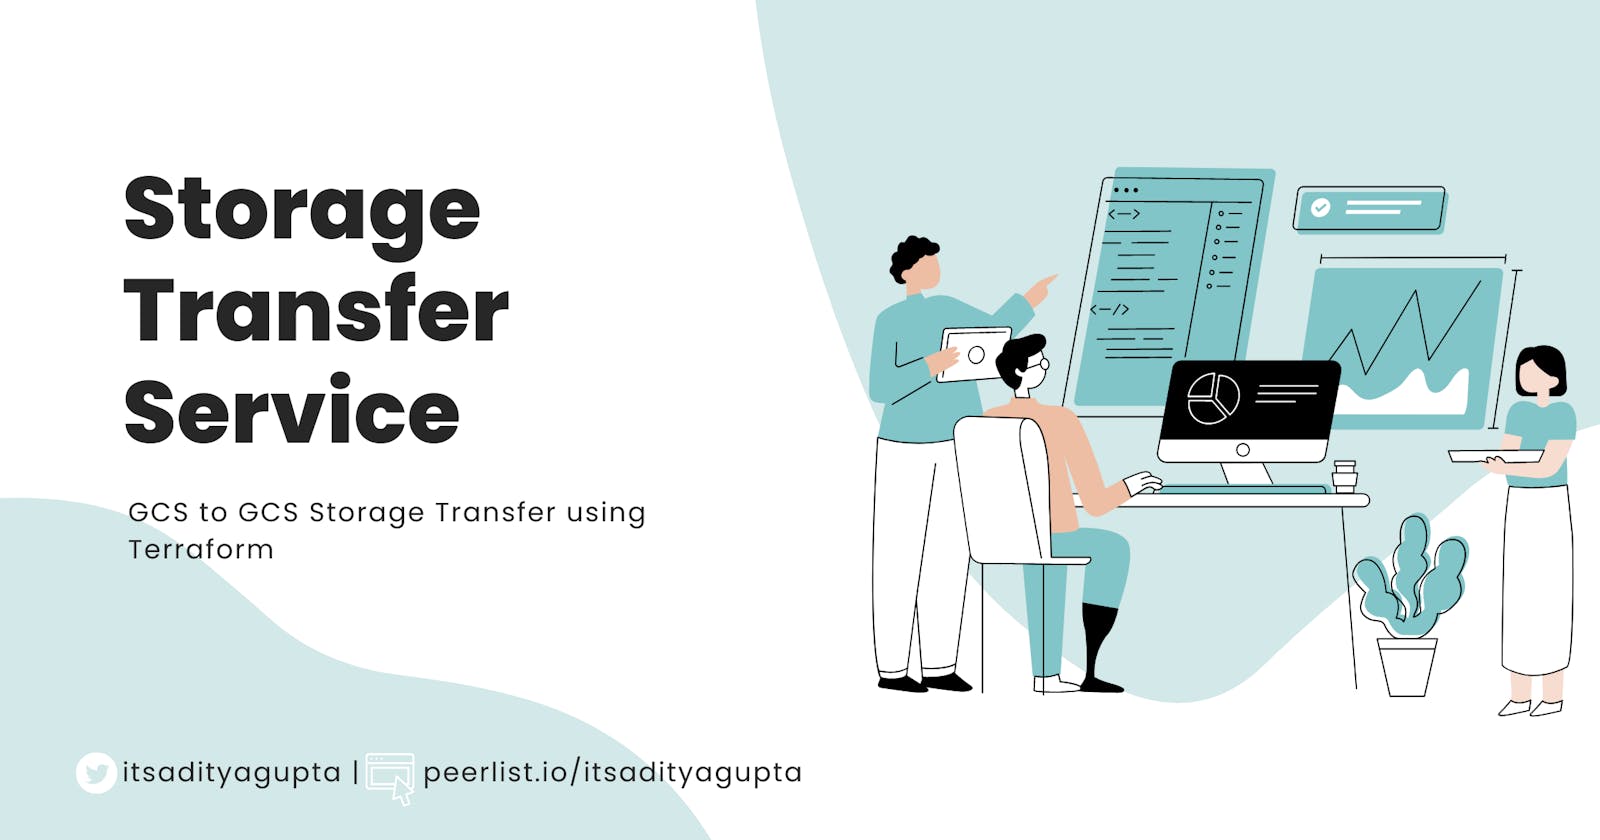 Storage Transfer Service in GCP